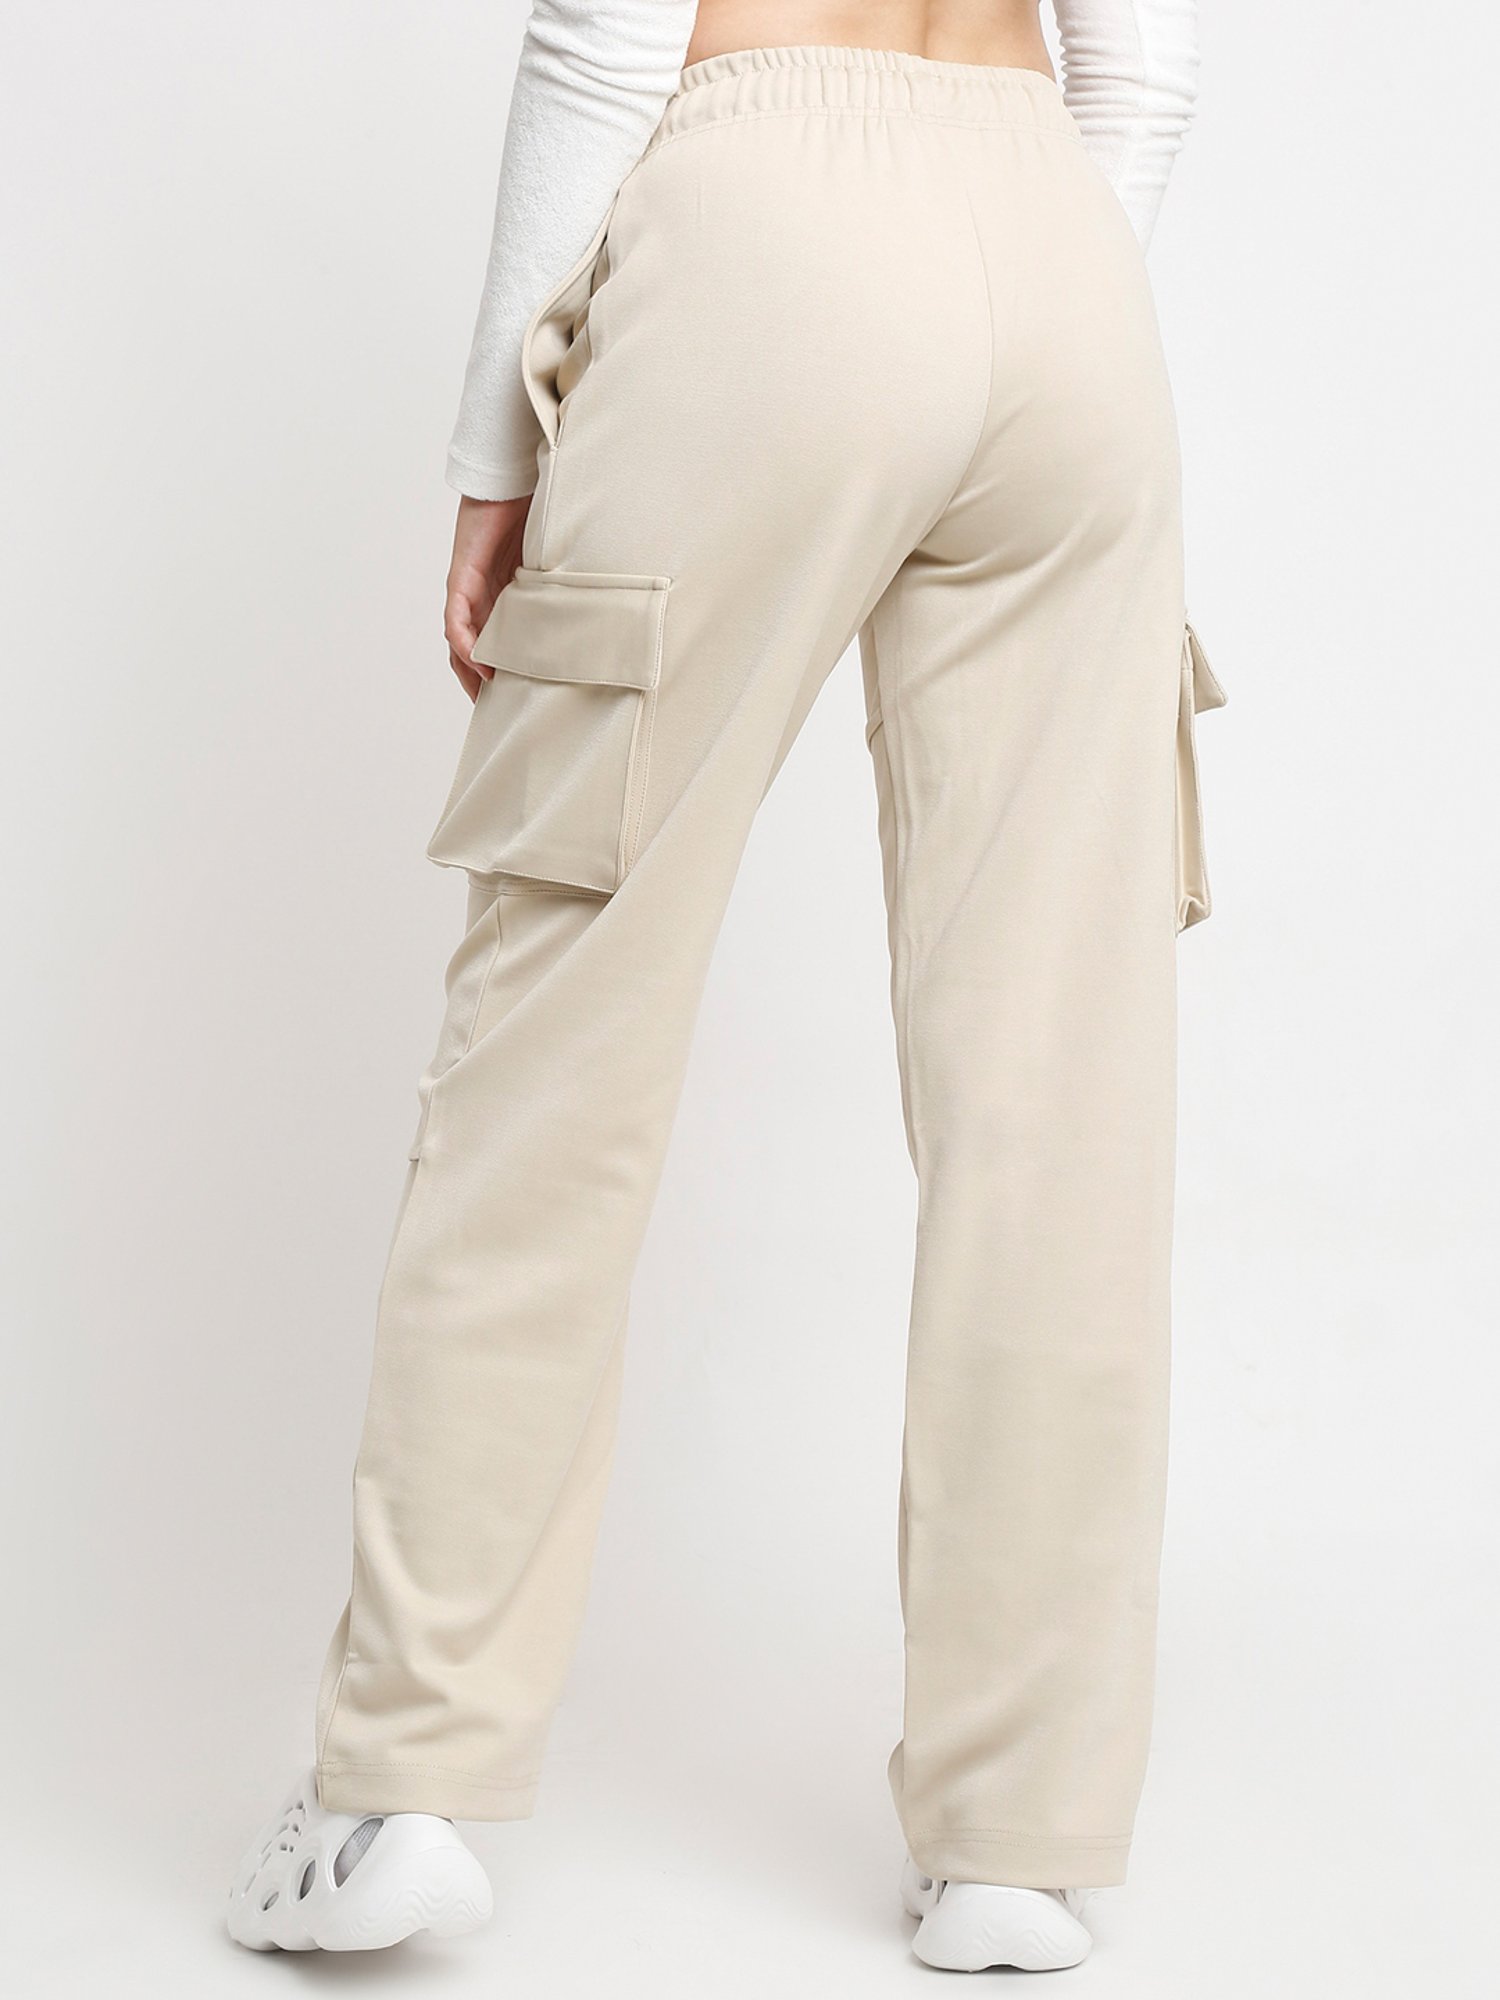 Stylish Cotton Fabric Women's Cargo Pant, Trendy & Comfortable Cargo Pant,  Beige Color Cargo, Elastic Waist